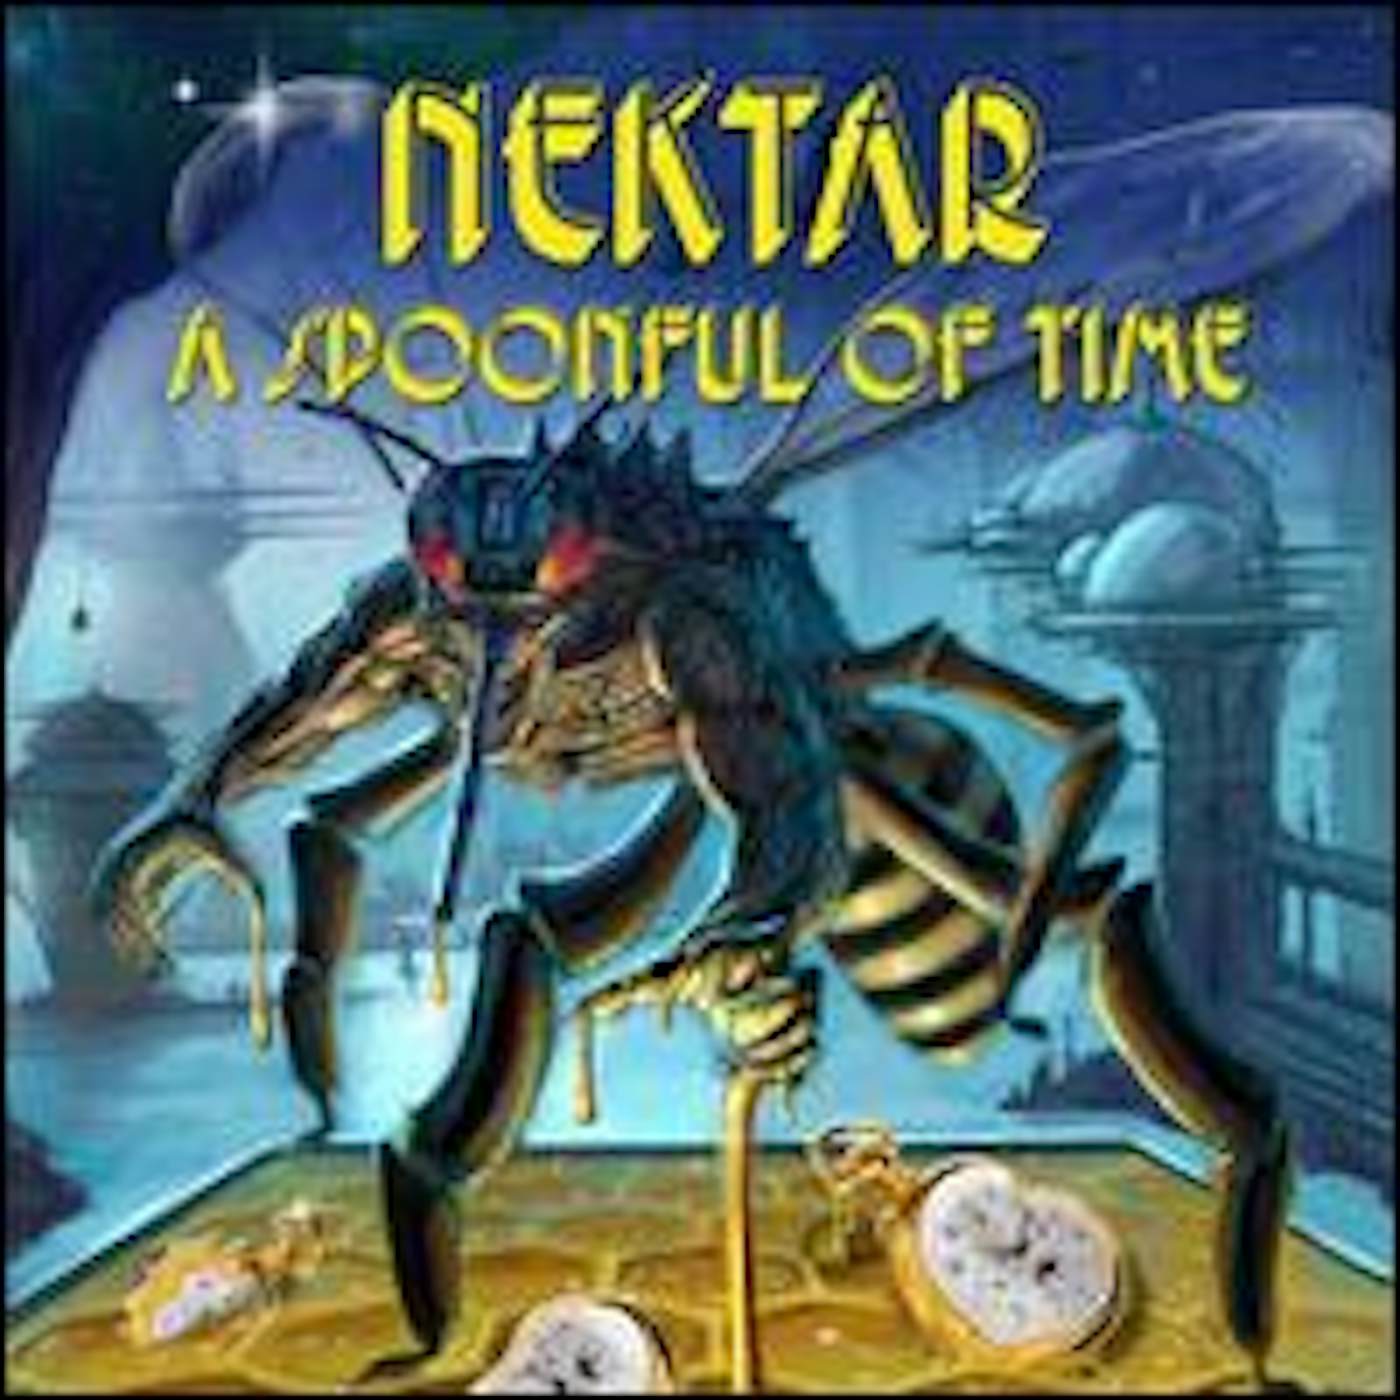 Nektar SPOONFUL OF TIME CD